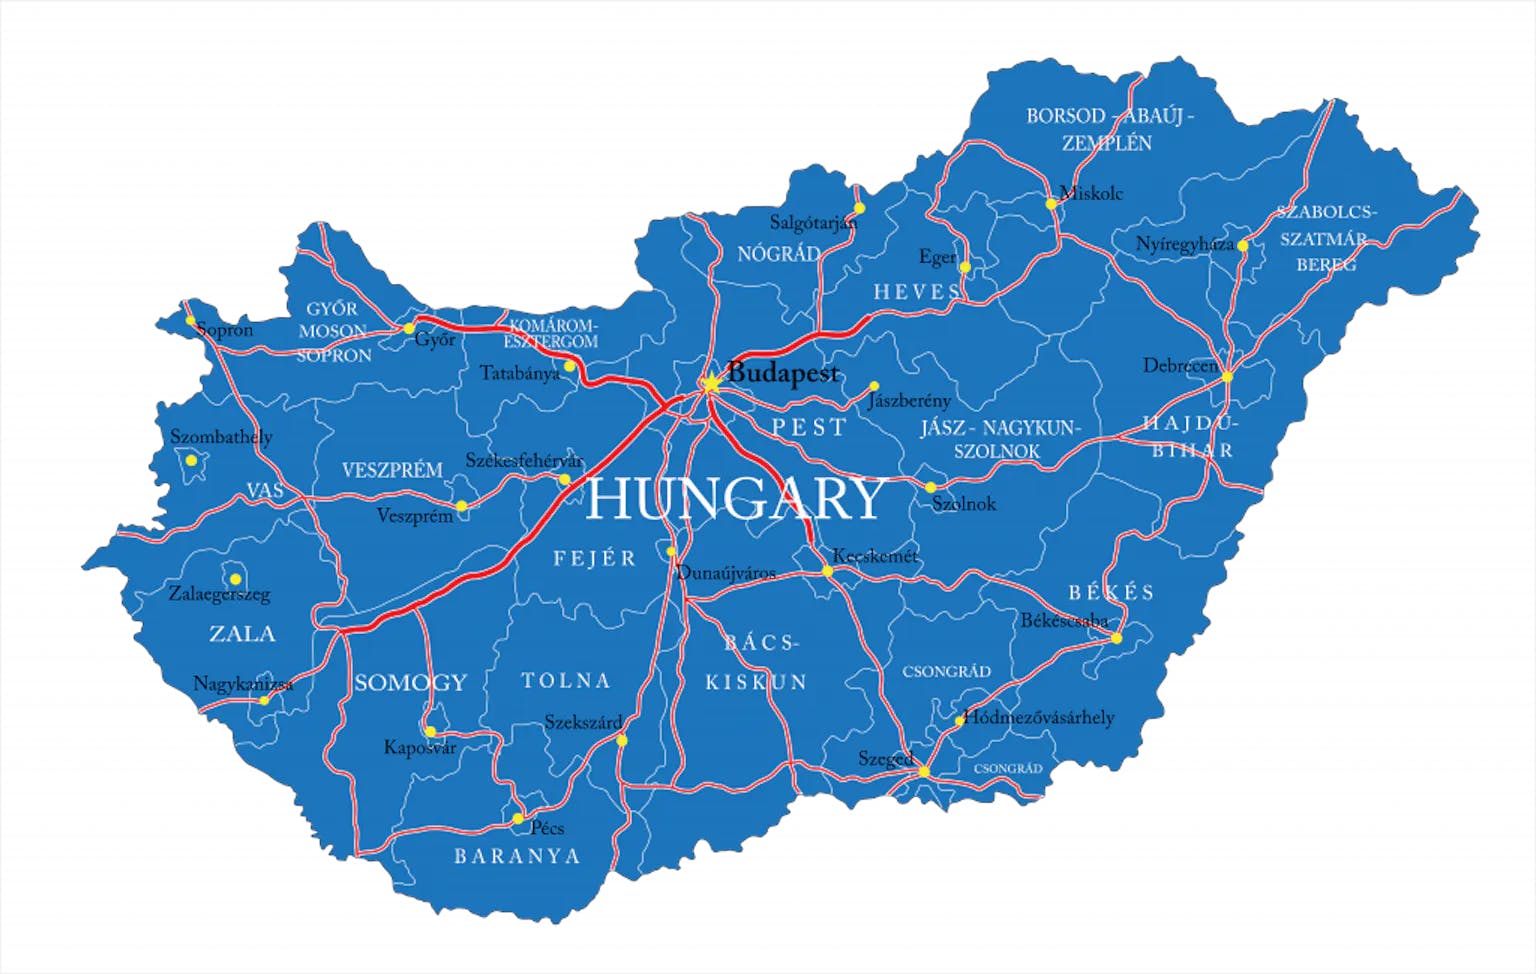 Toll roads of Hungary